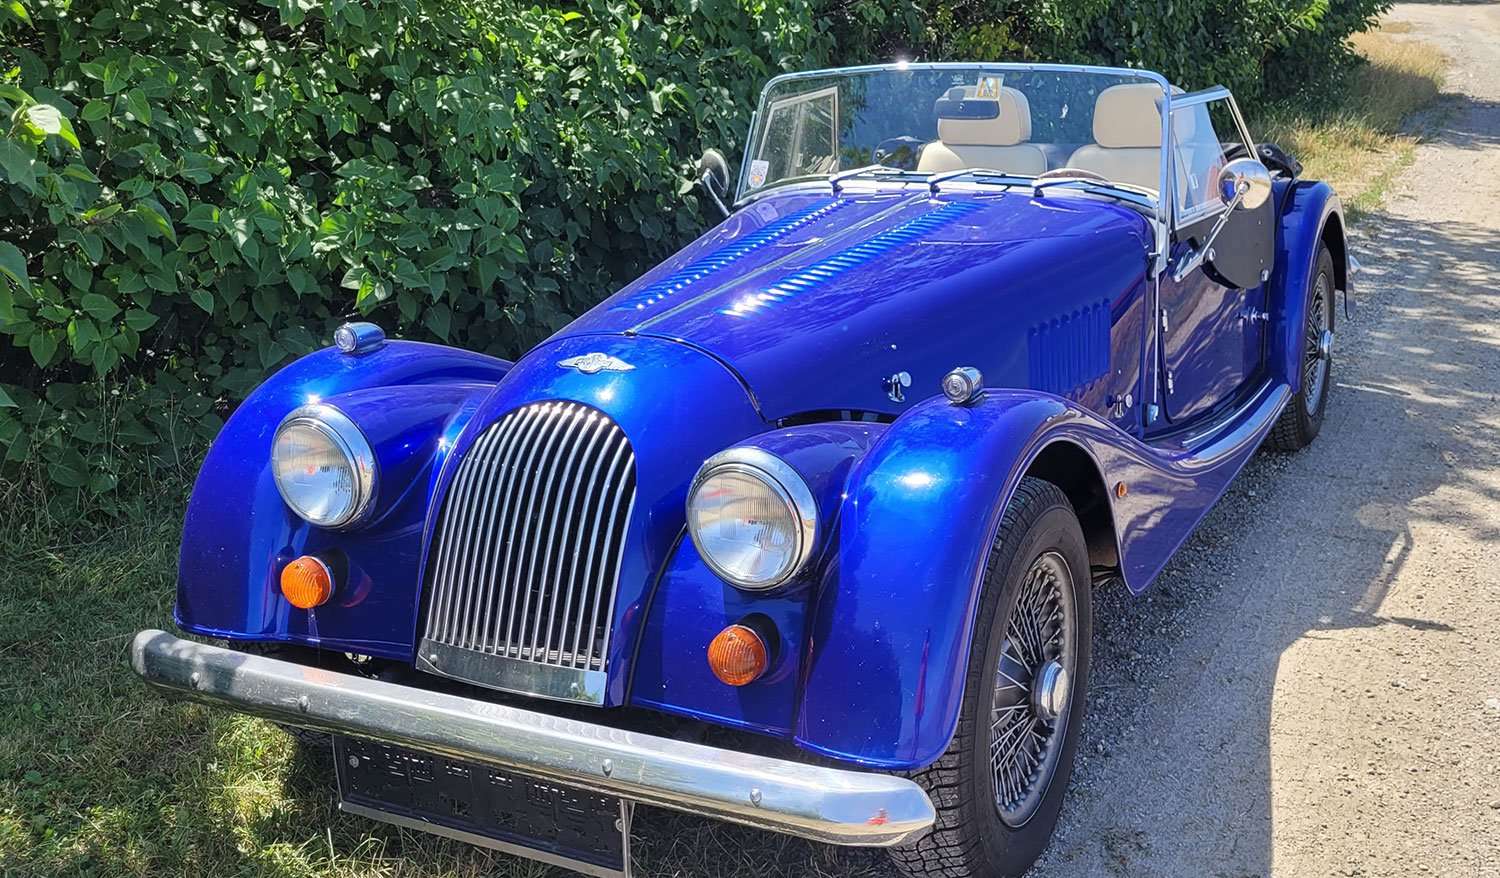 Morgan 4/4 Convertible in Blue used in Trumau for € 45,500.-